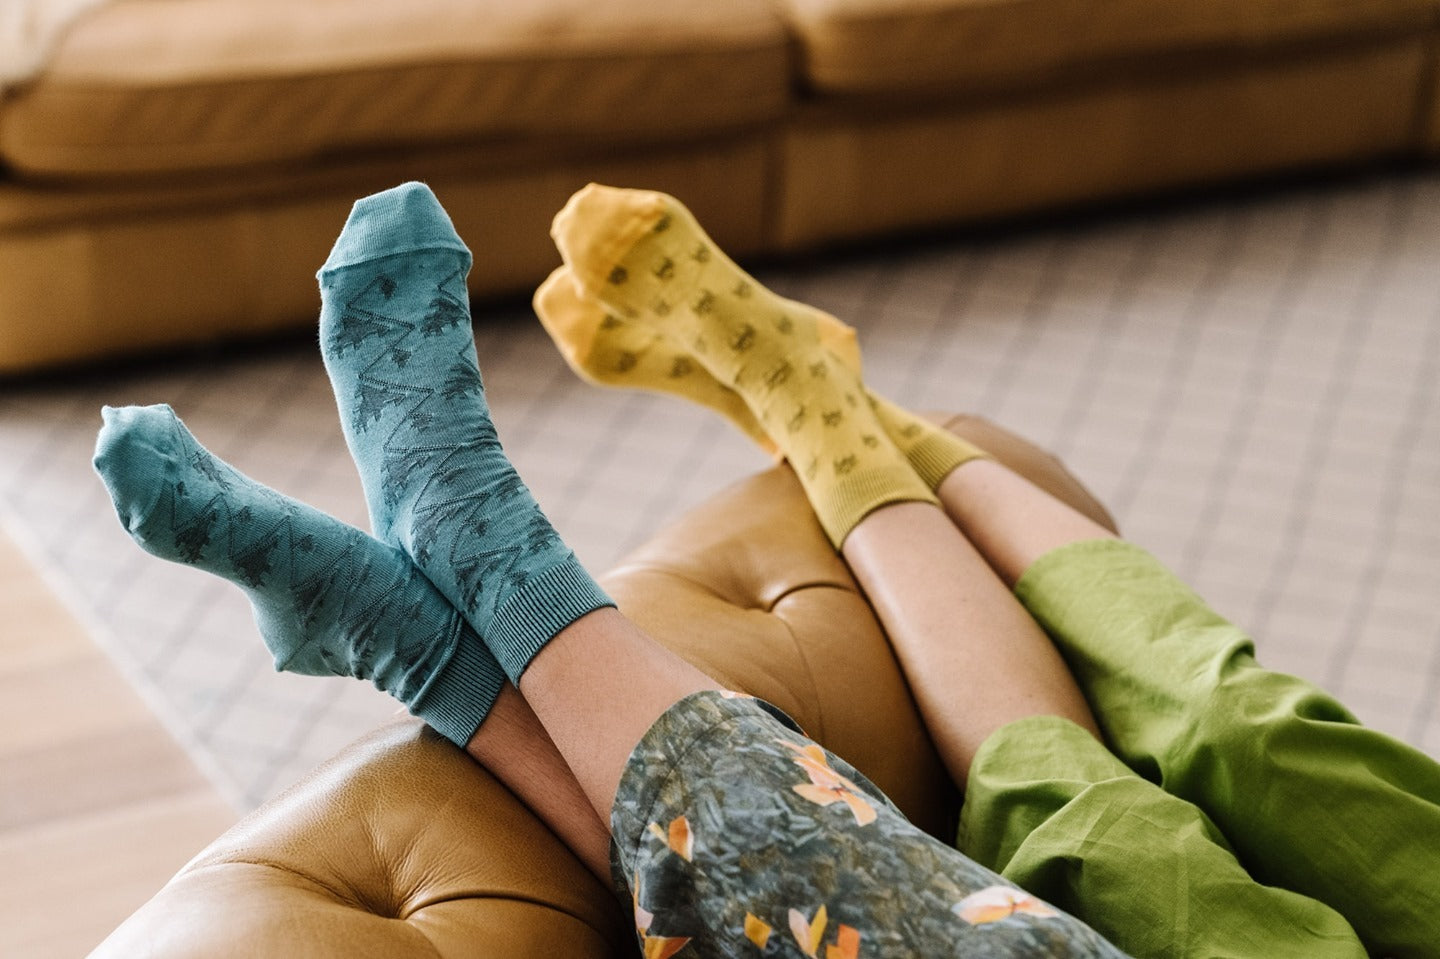 Cotton Aussie Made Socks (One Size) - Tightology socks Tightology 